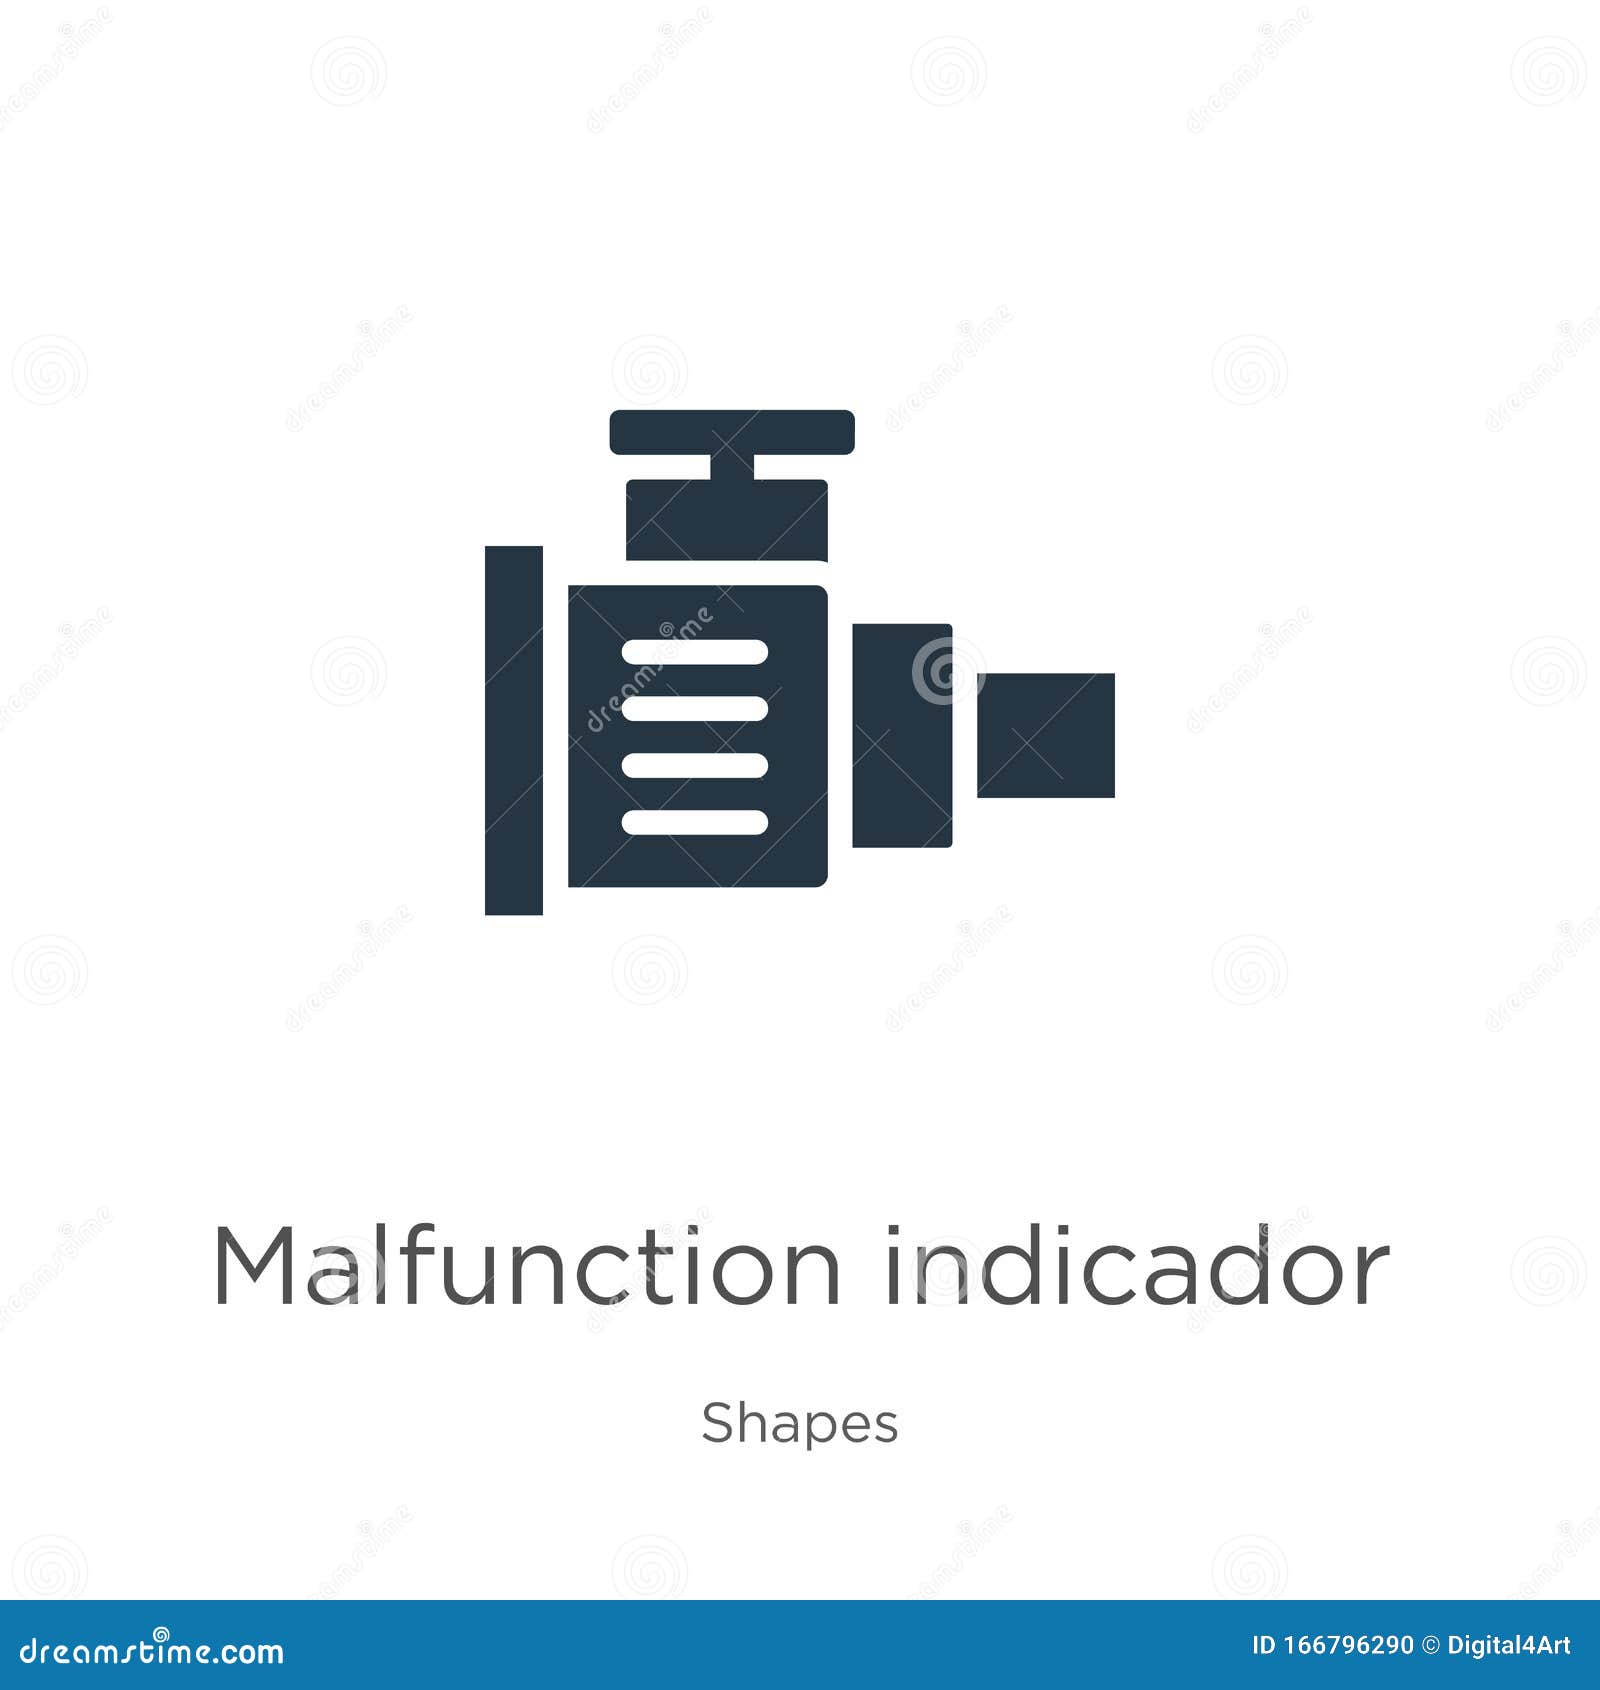 malfunction indicador icon . trendy flat malfunction indicador icon from s collection  on white background.